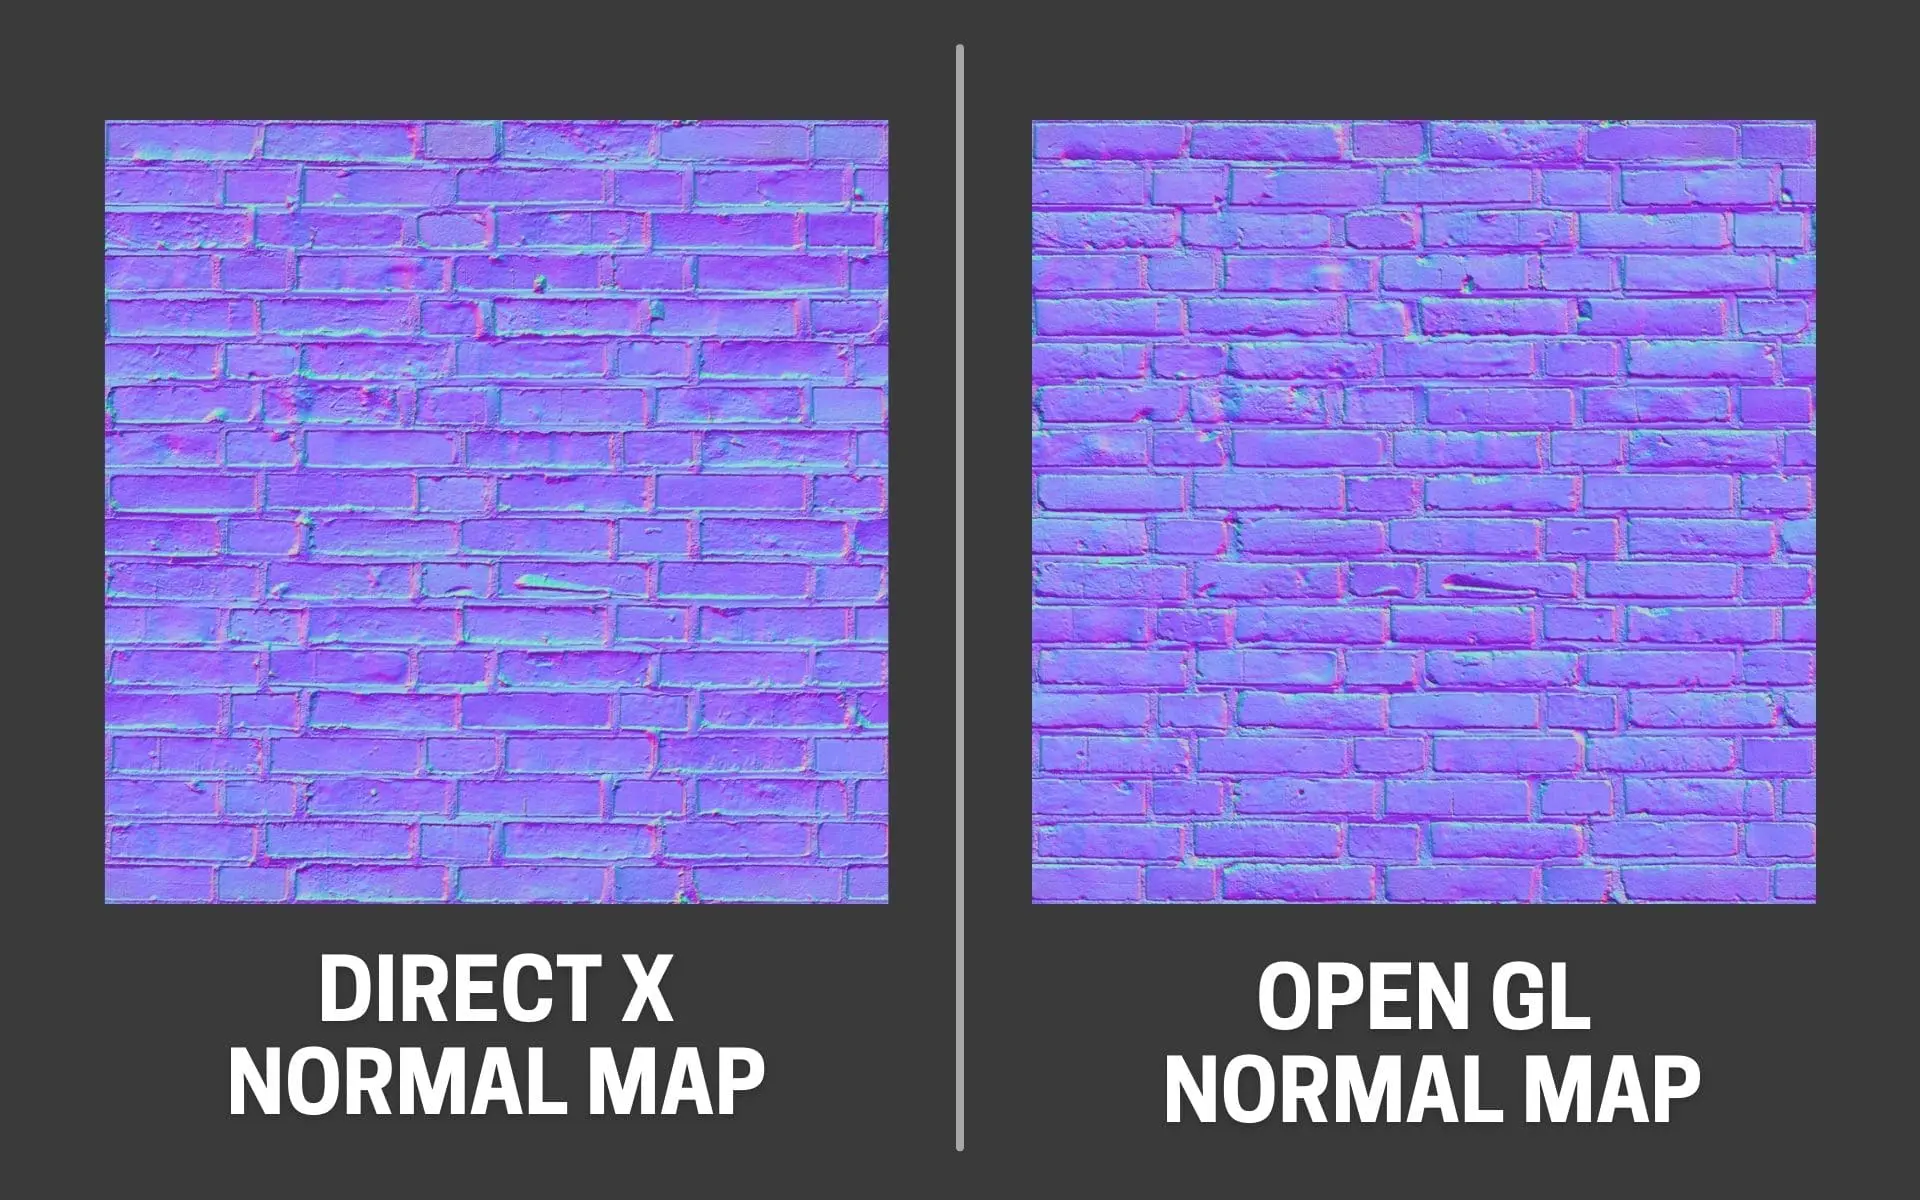 Direct X Normal Map vs Open GL Normal Map - CG - Basics Of 3D Art For Game Development Tutorial